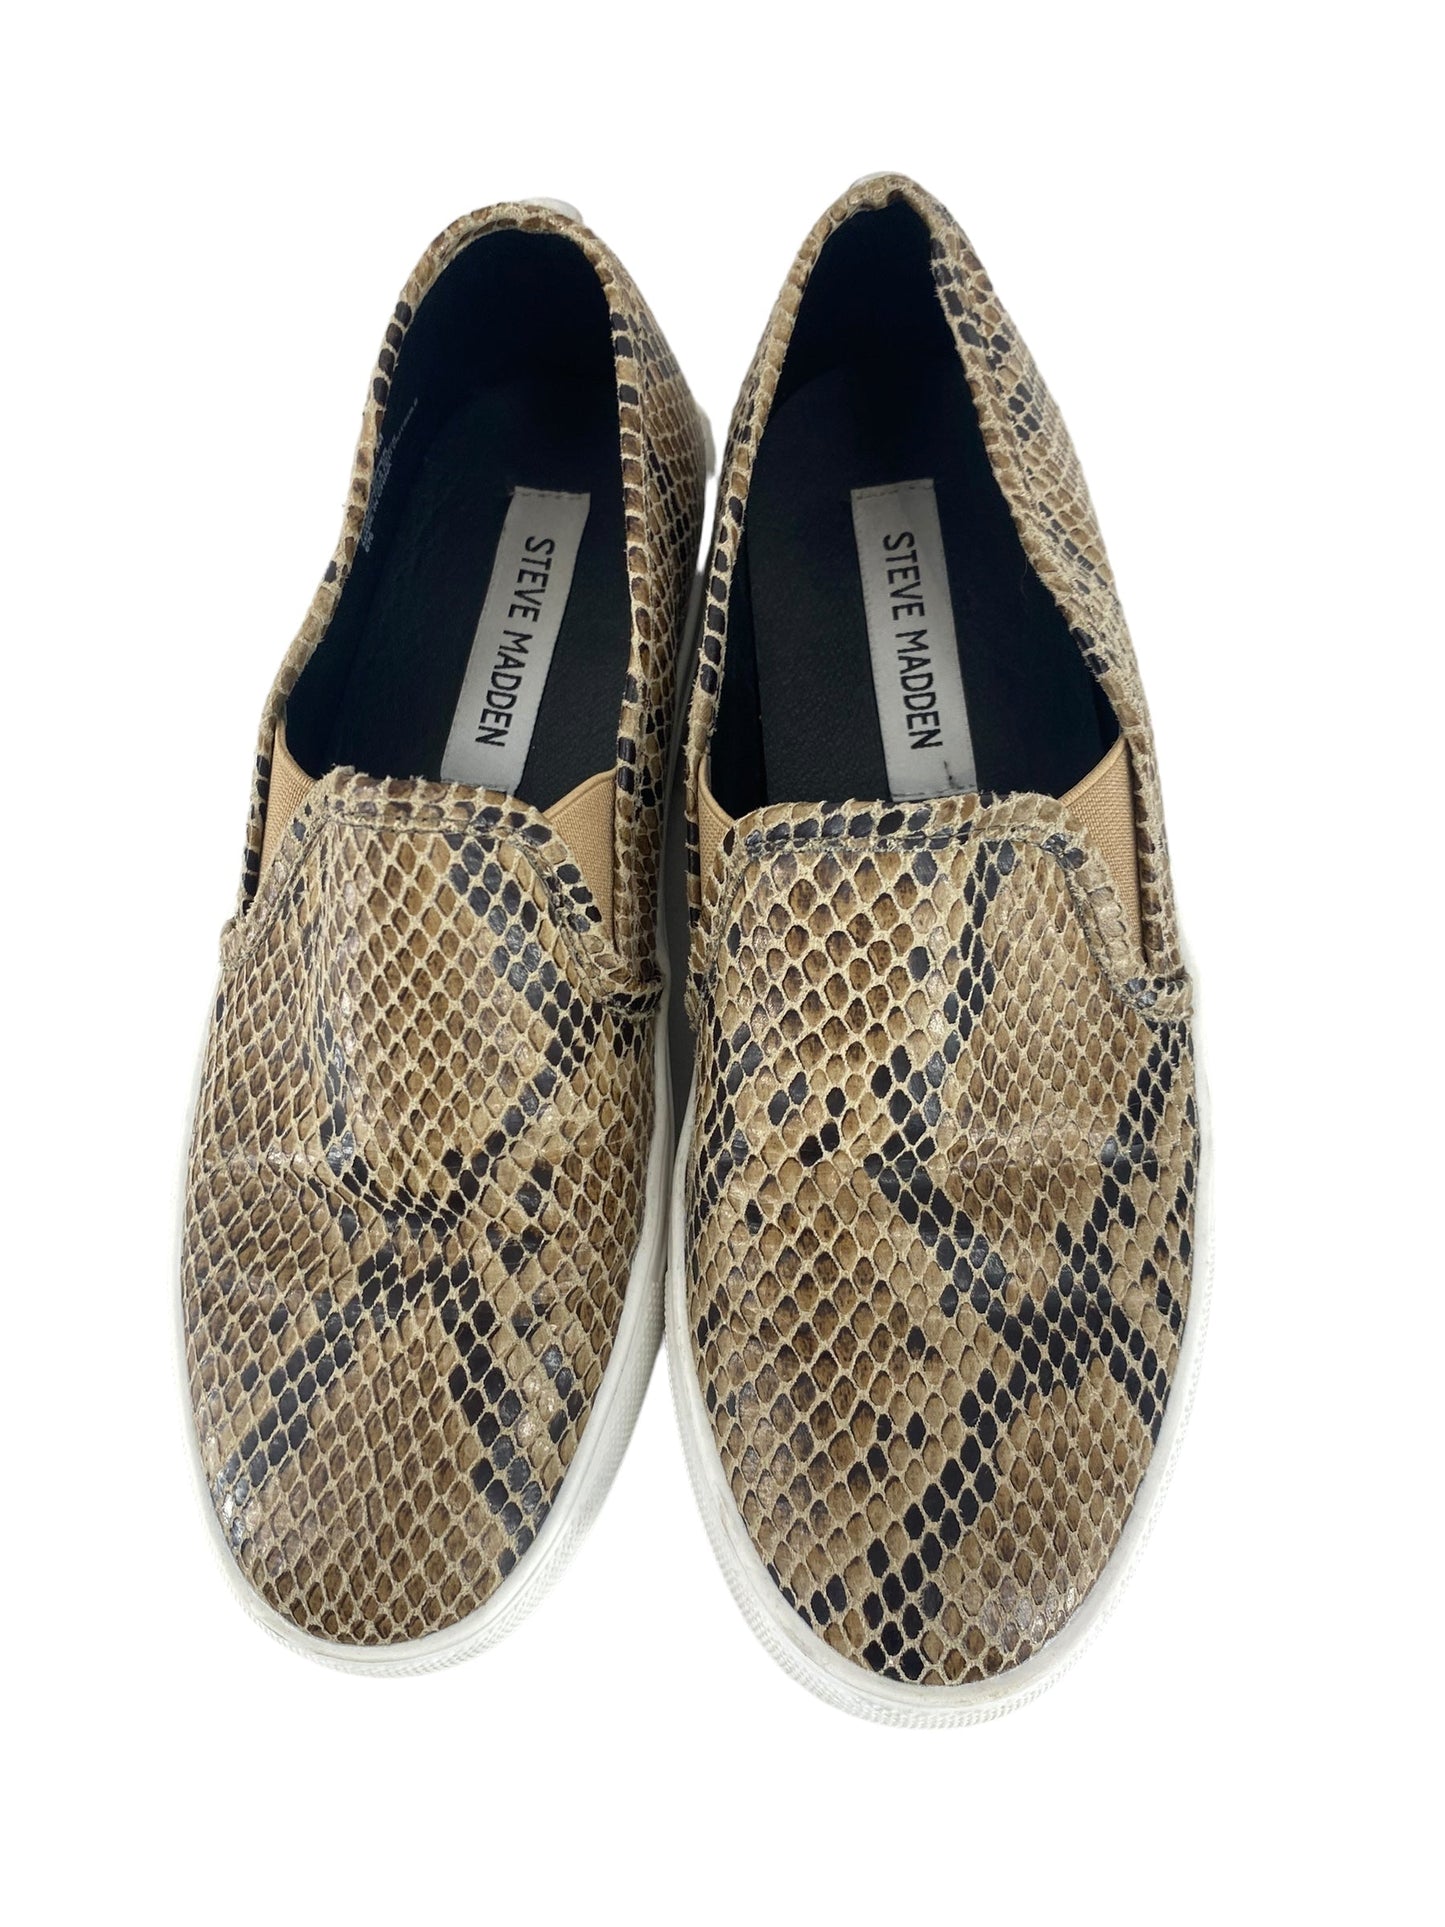 Snakeskin Print Shoes Flats Steve Madden, Size 7